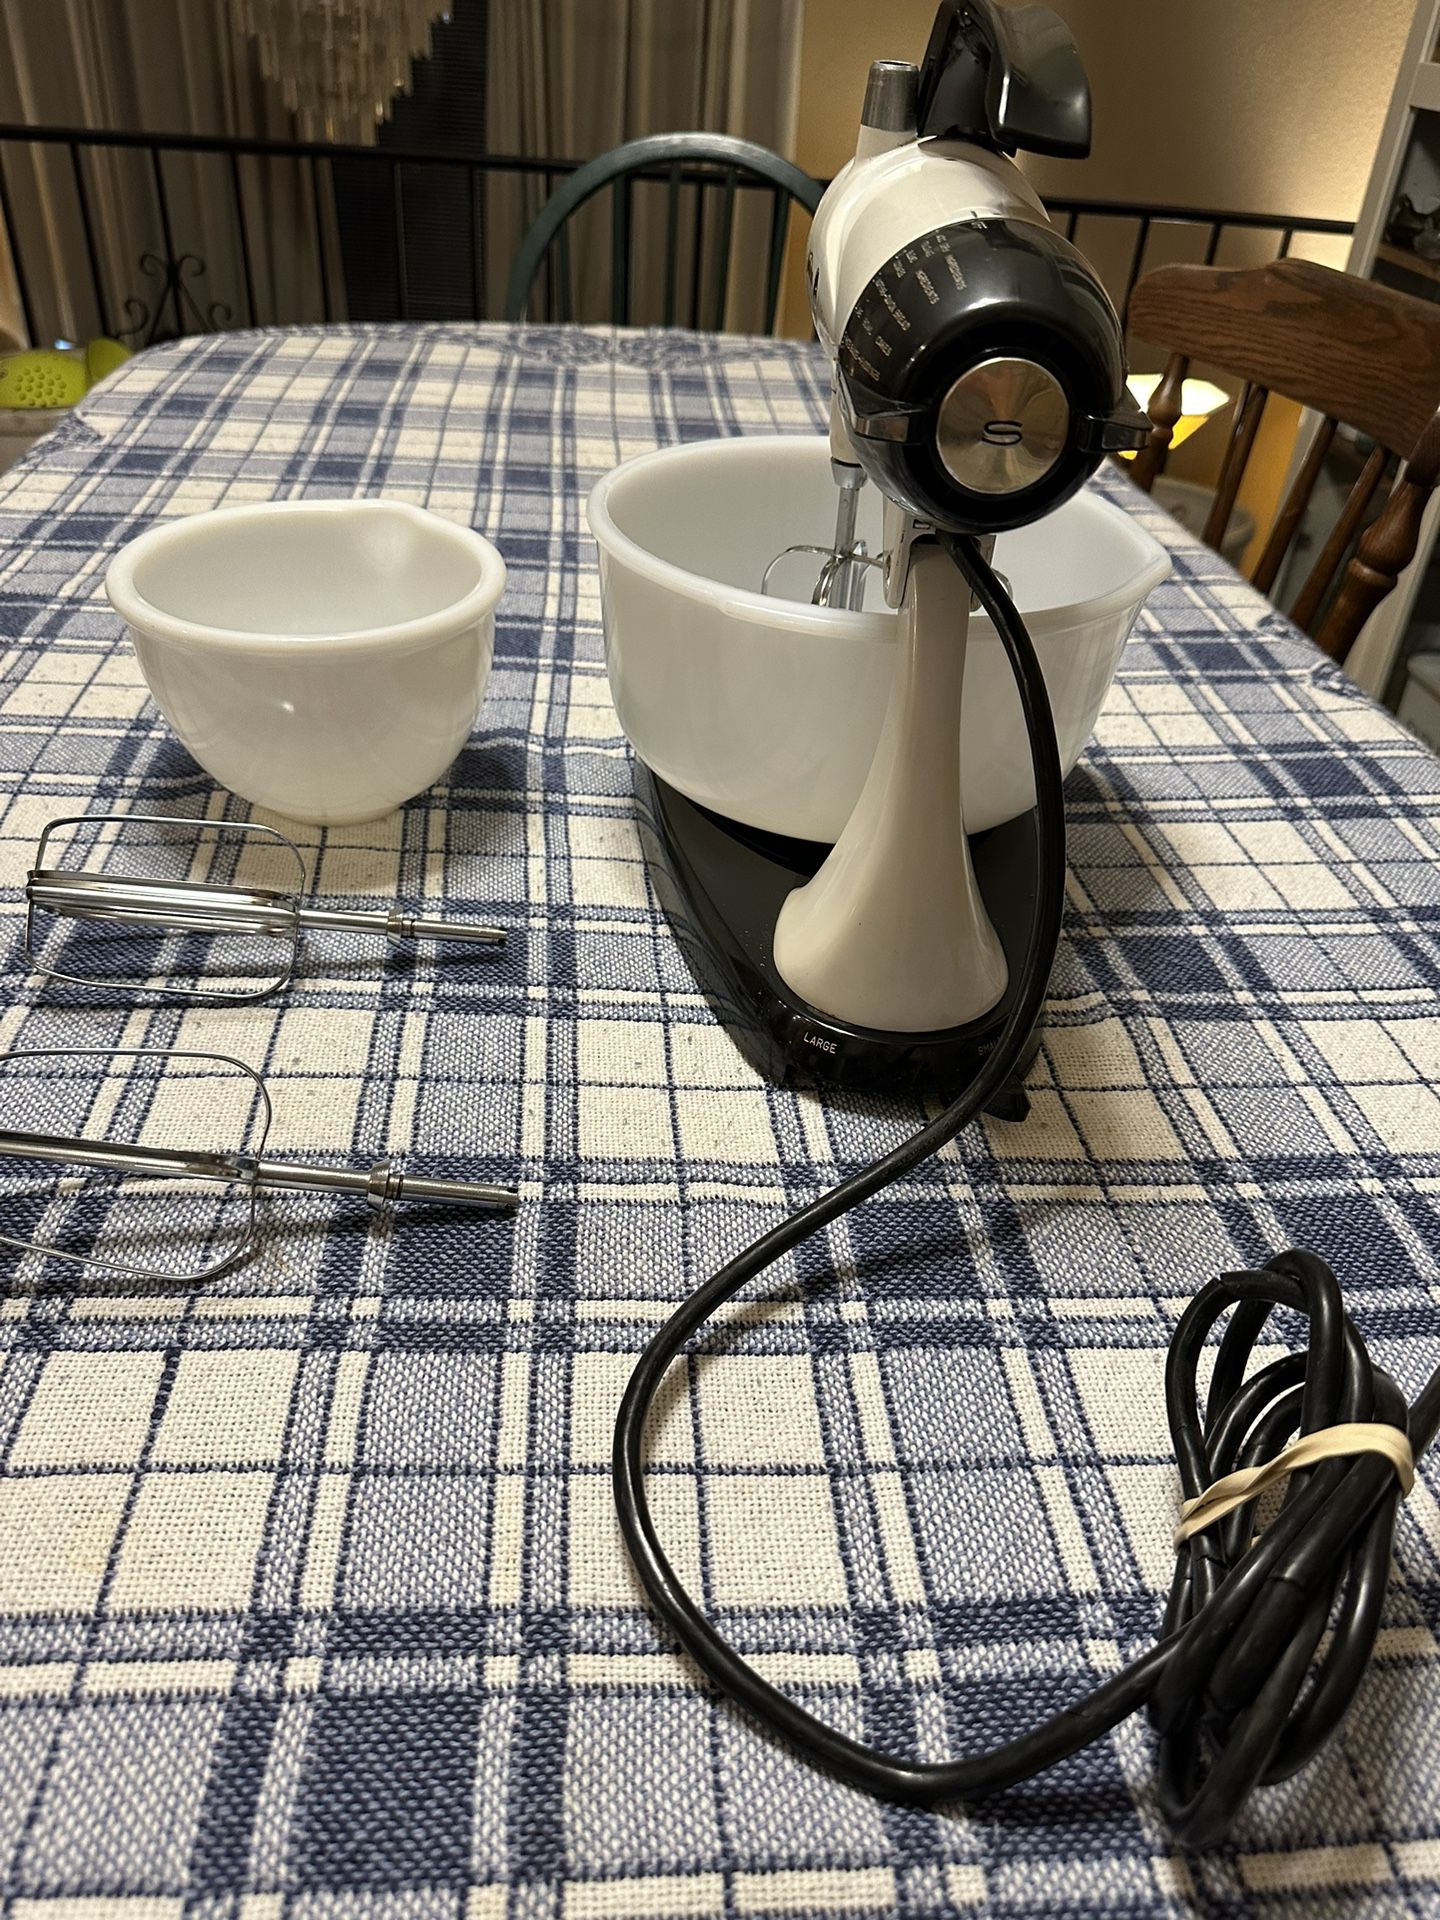 Sunbeam Mixmaster White 10-speed Stand Mixer W/ Two Milk Glass Bowls 